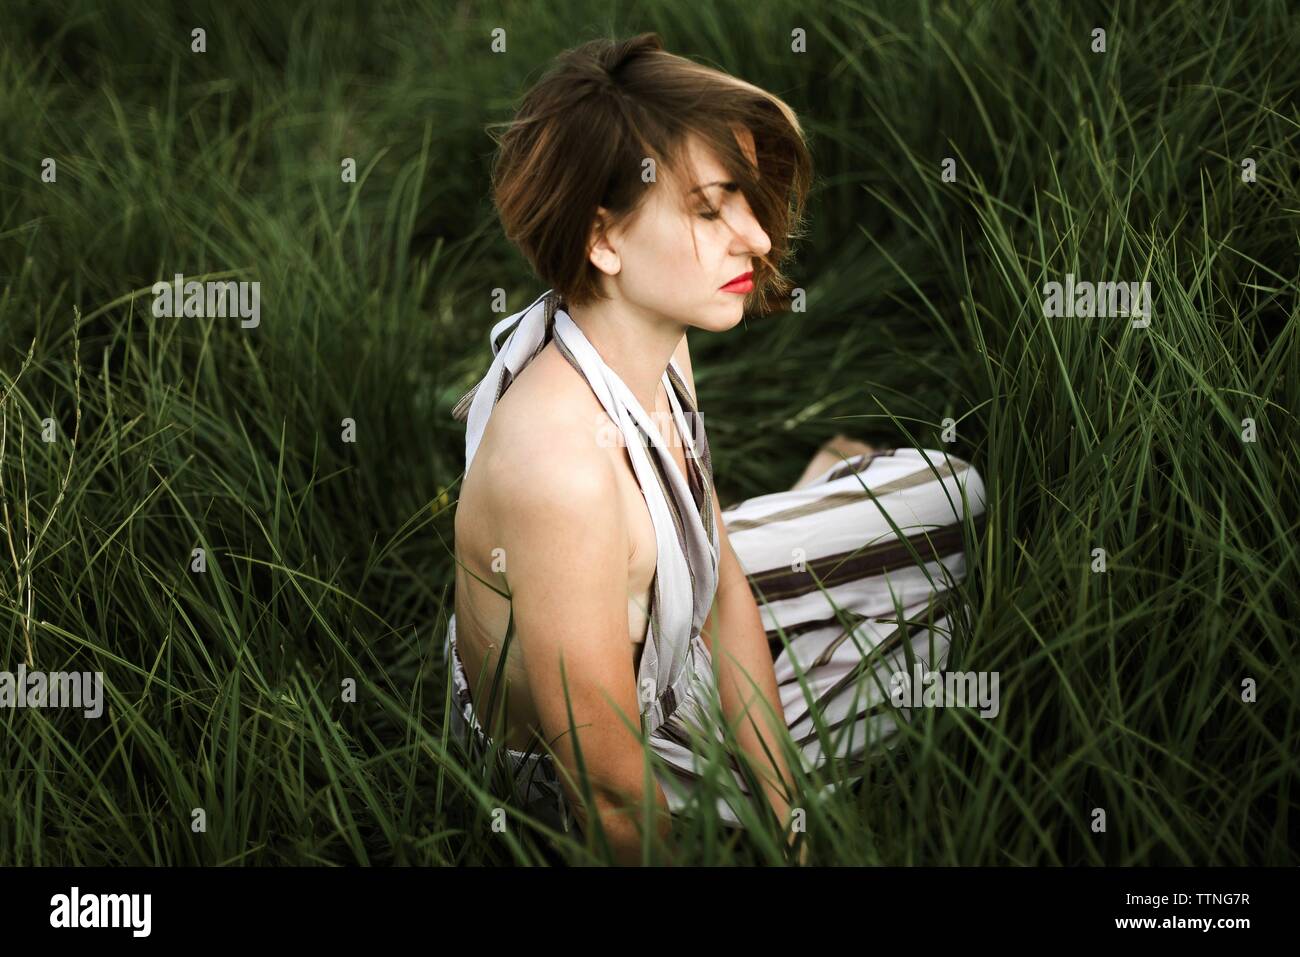 Portrait of beautiful woman in dress relaxing on grassy field Stock Photo